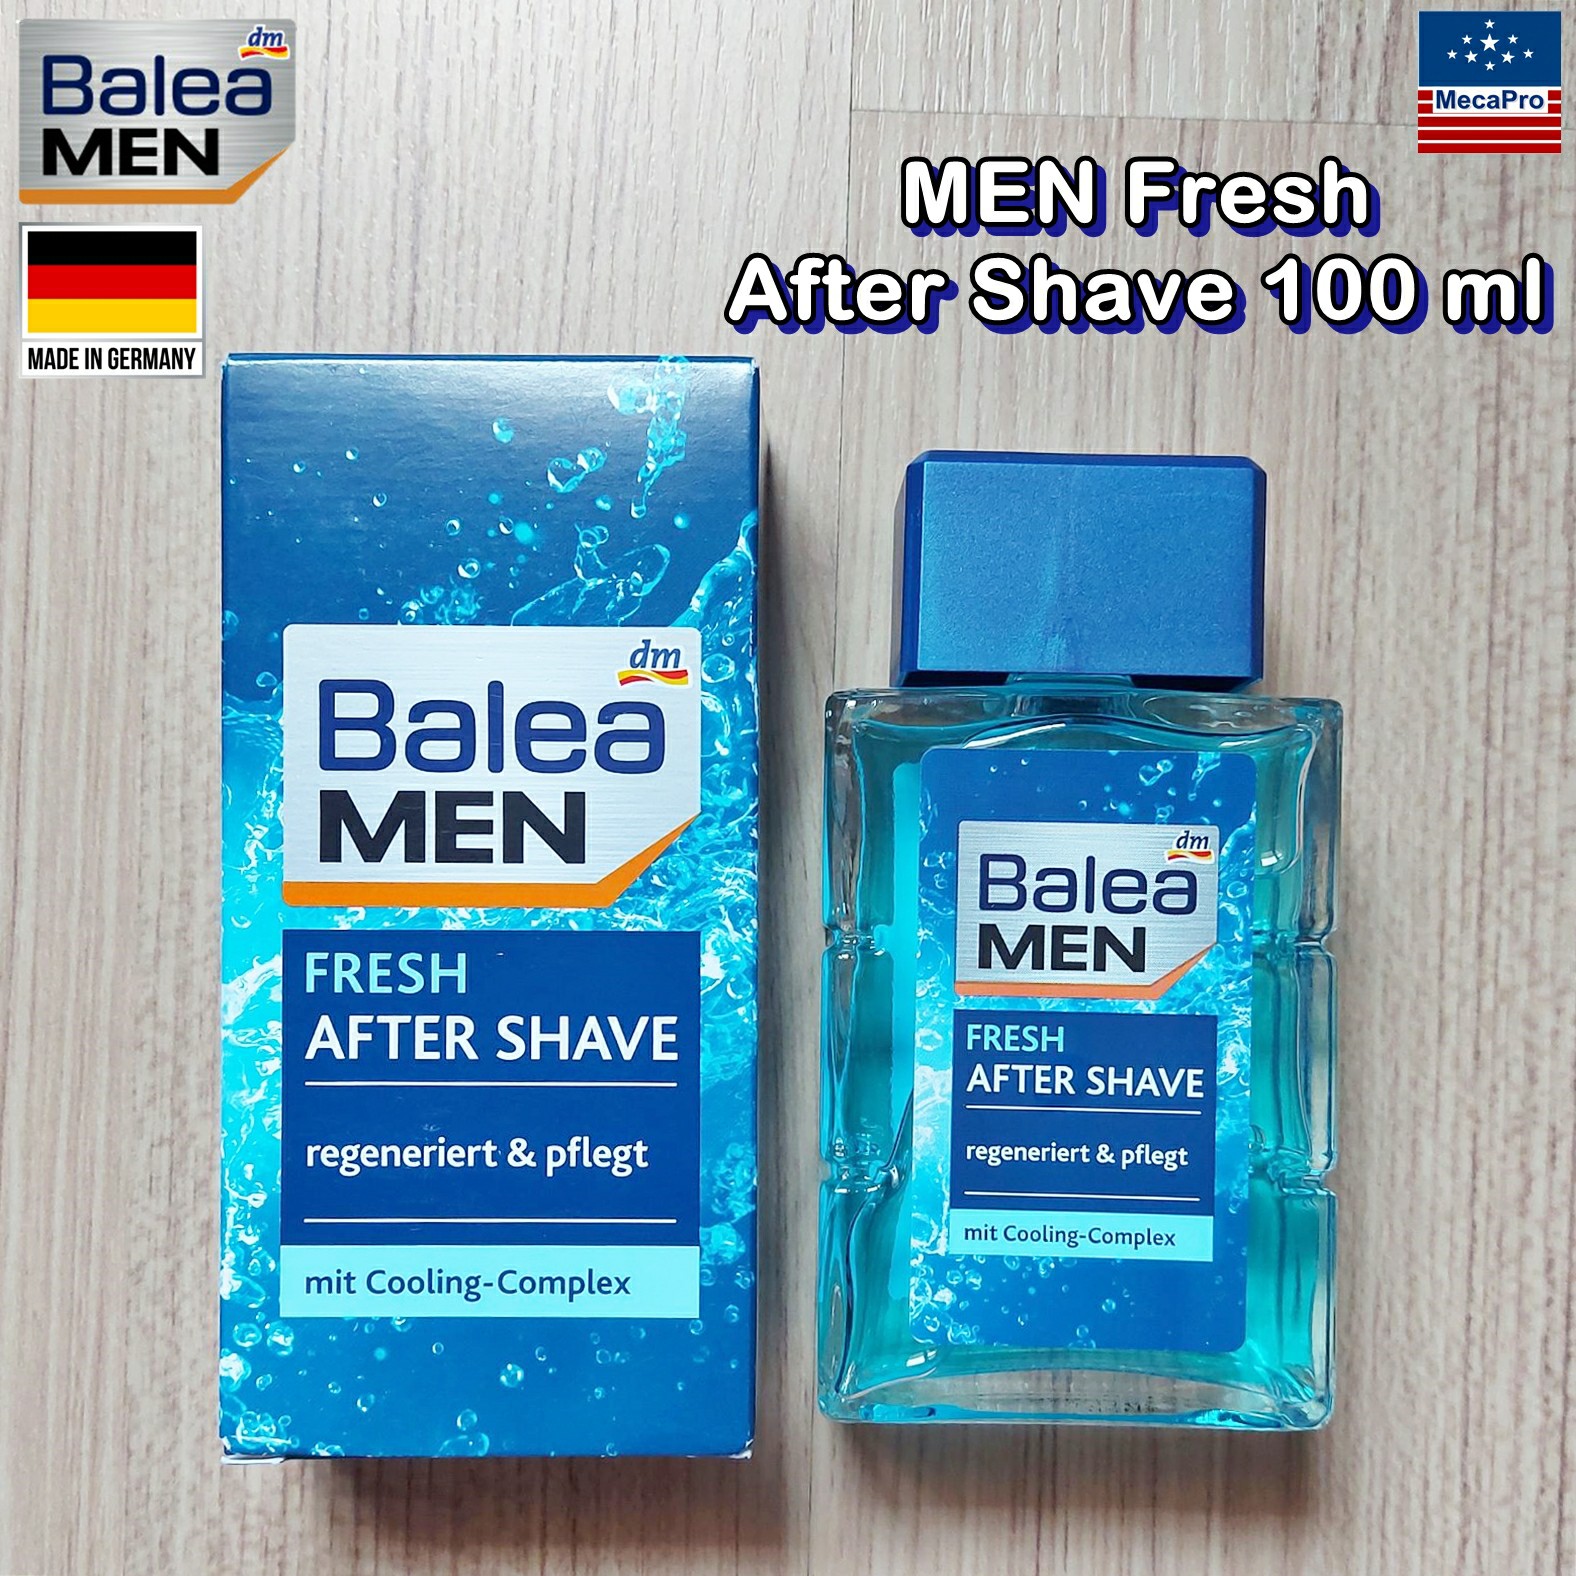 Balea® MEN Fresh After Shave 100 ml บาเลียเมน อาฟเตอร์เชฟ เฟรช บำรุงผิวหลังโกนหนวด สำหรับผู้ชาย